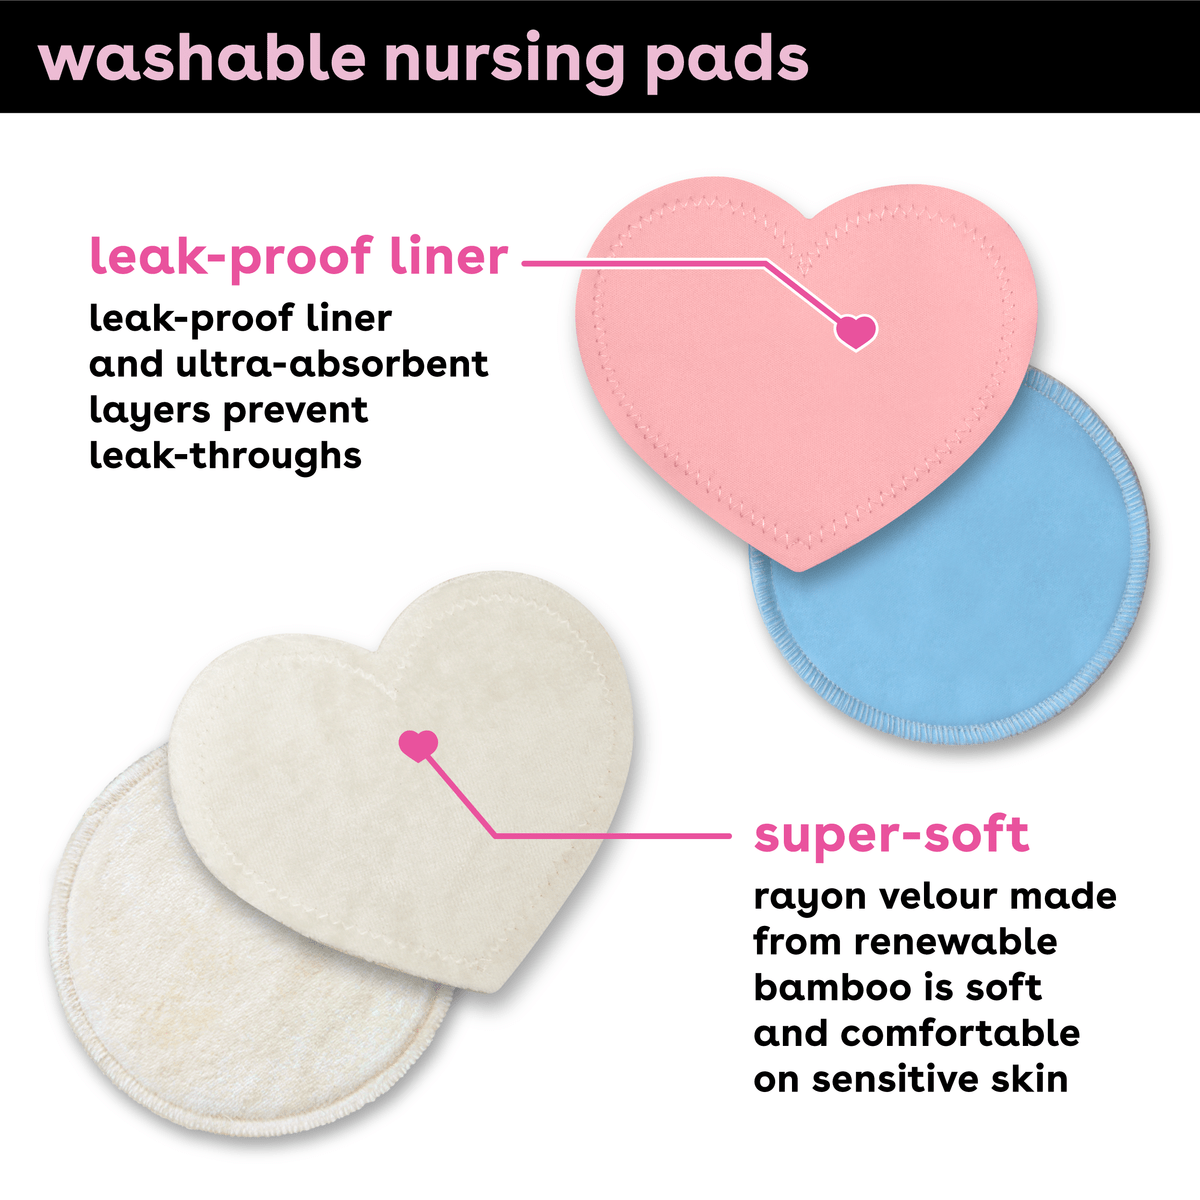 regular nursing pads